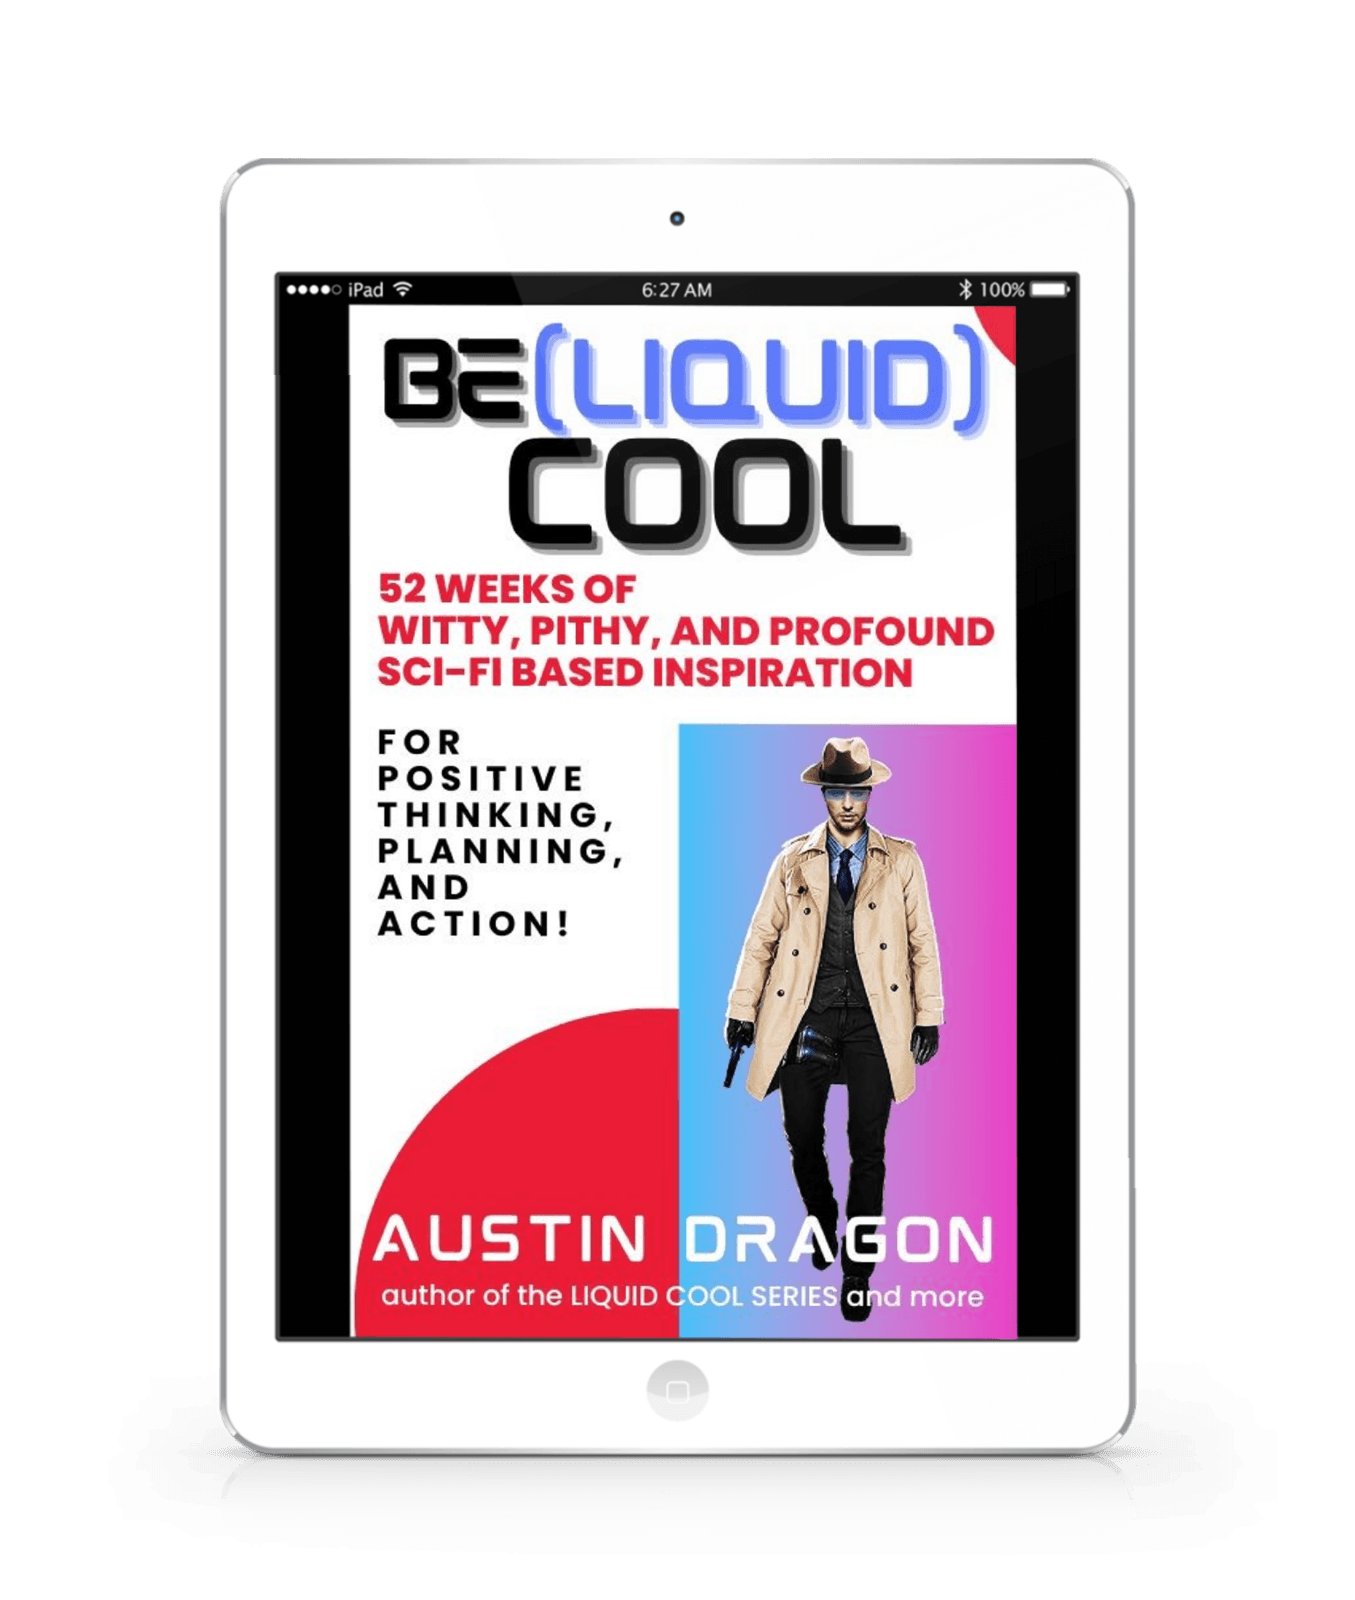 Be (Liquid) Cool:  52 Weeks of... (Inspirational Planner) Ebook